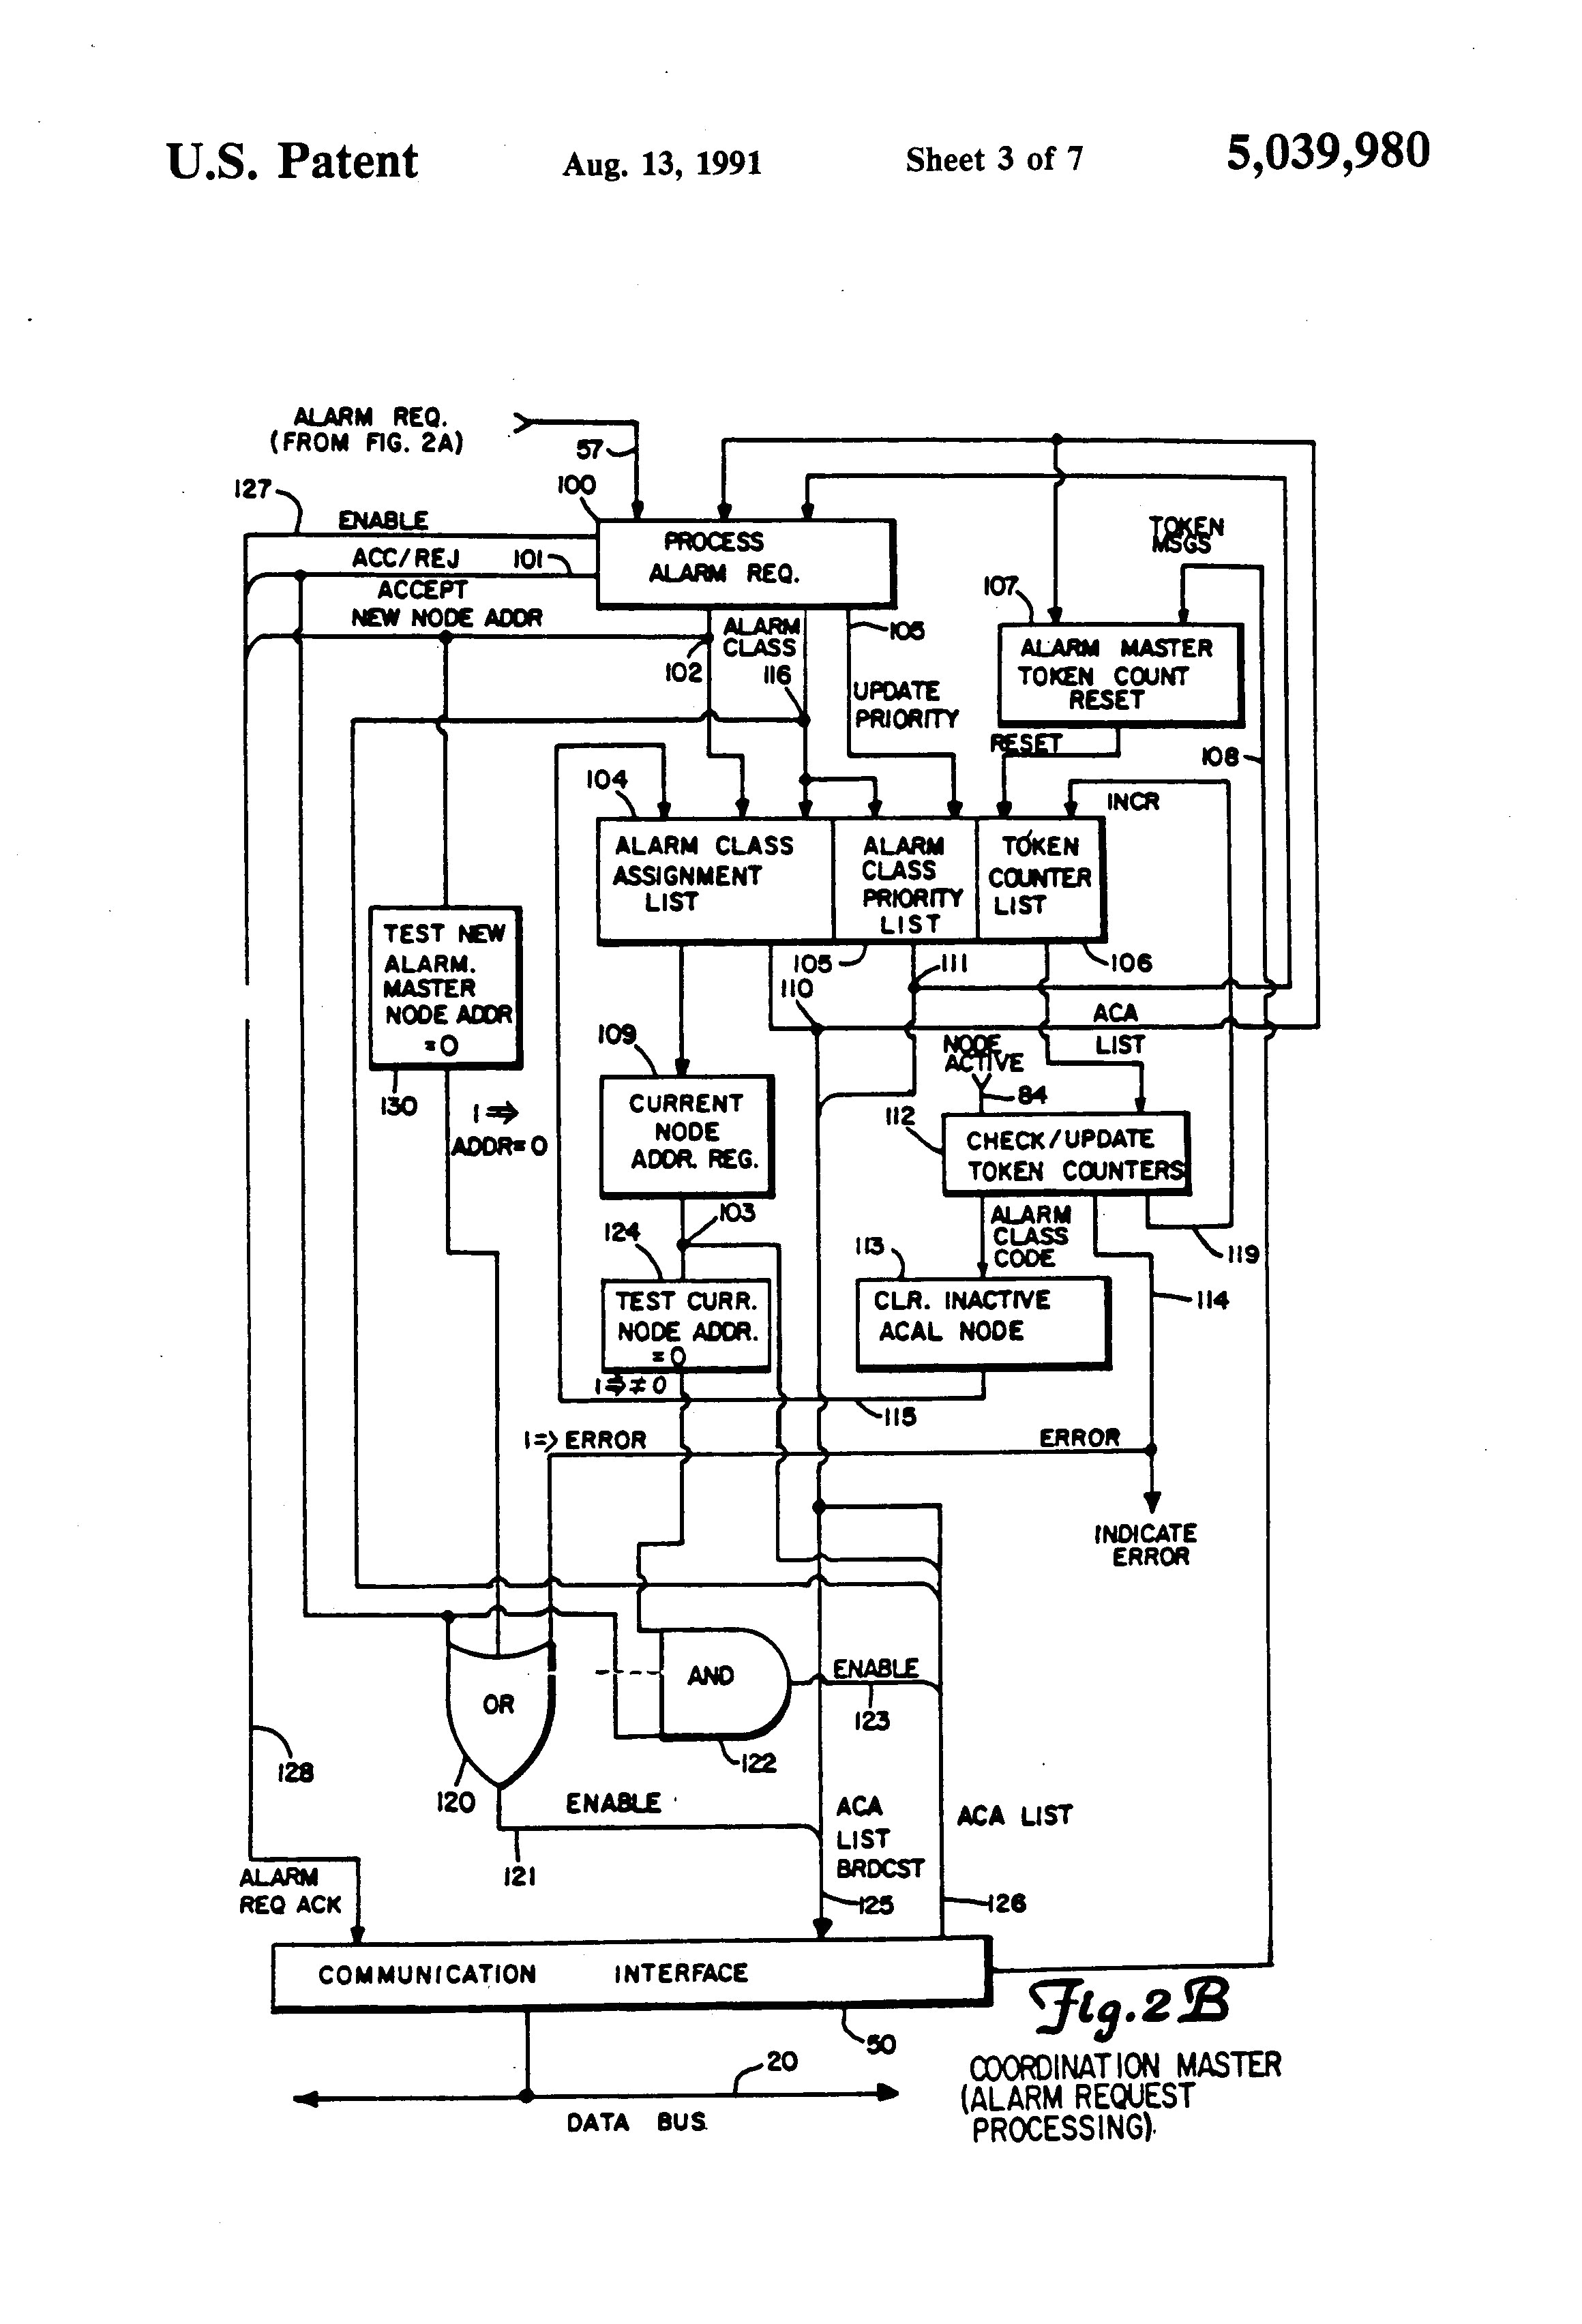 wiring diagram for twt 27 true true wiring diagram centretrue wiring diagrams wiring diagram database